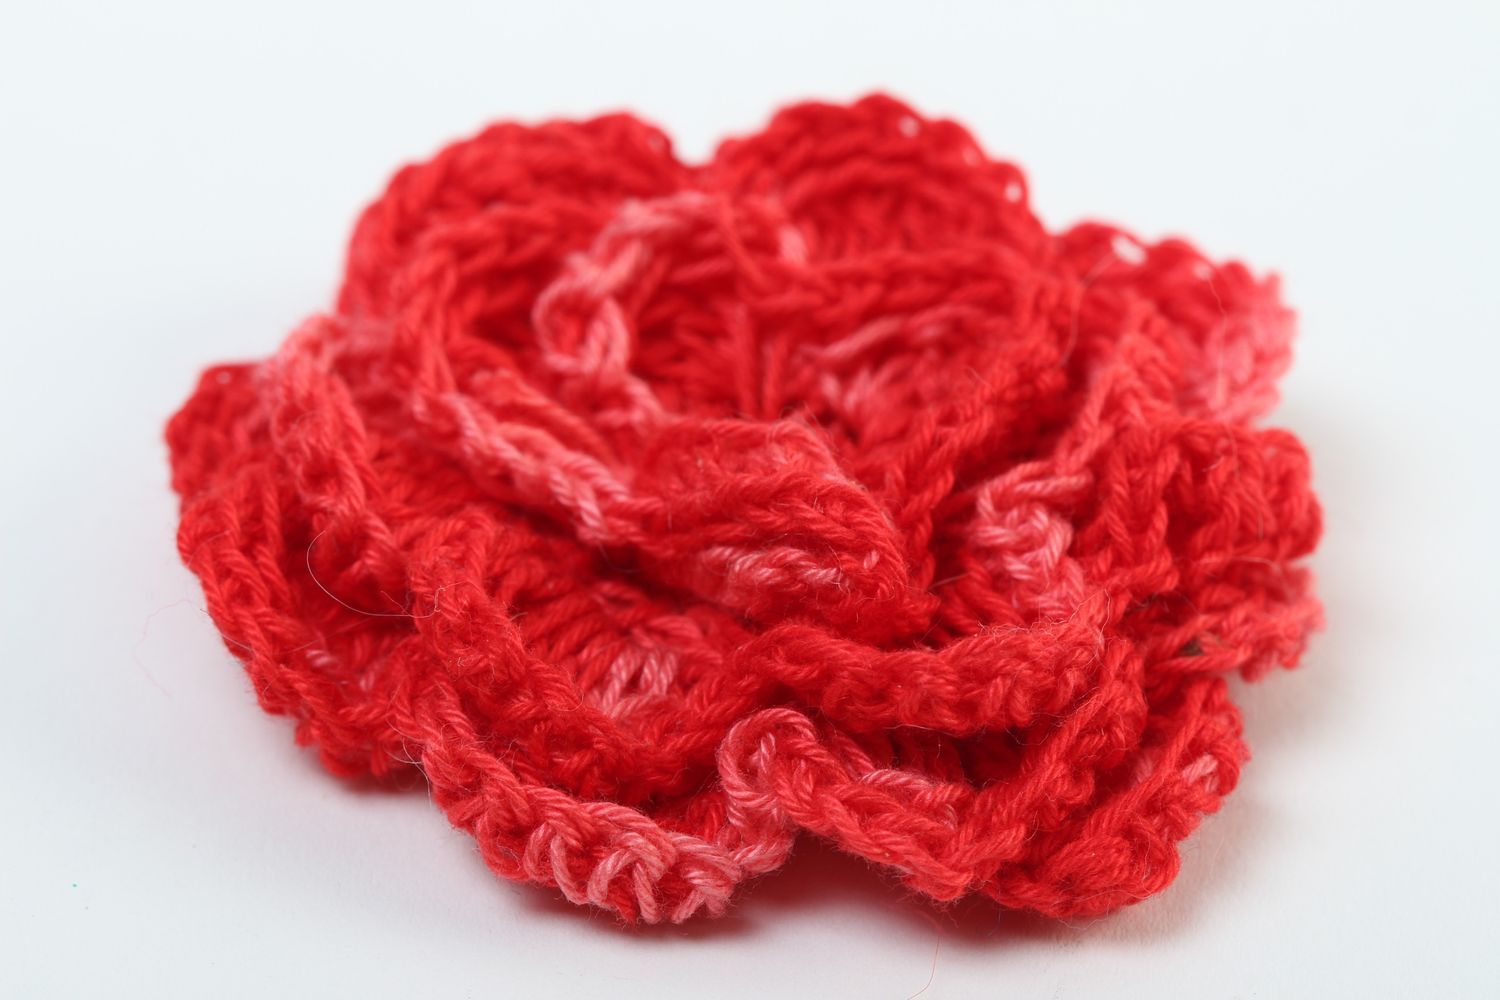 Handmade crocheted flower decorative flowers crochet ideas homemade crafts photo 3